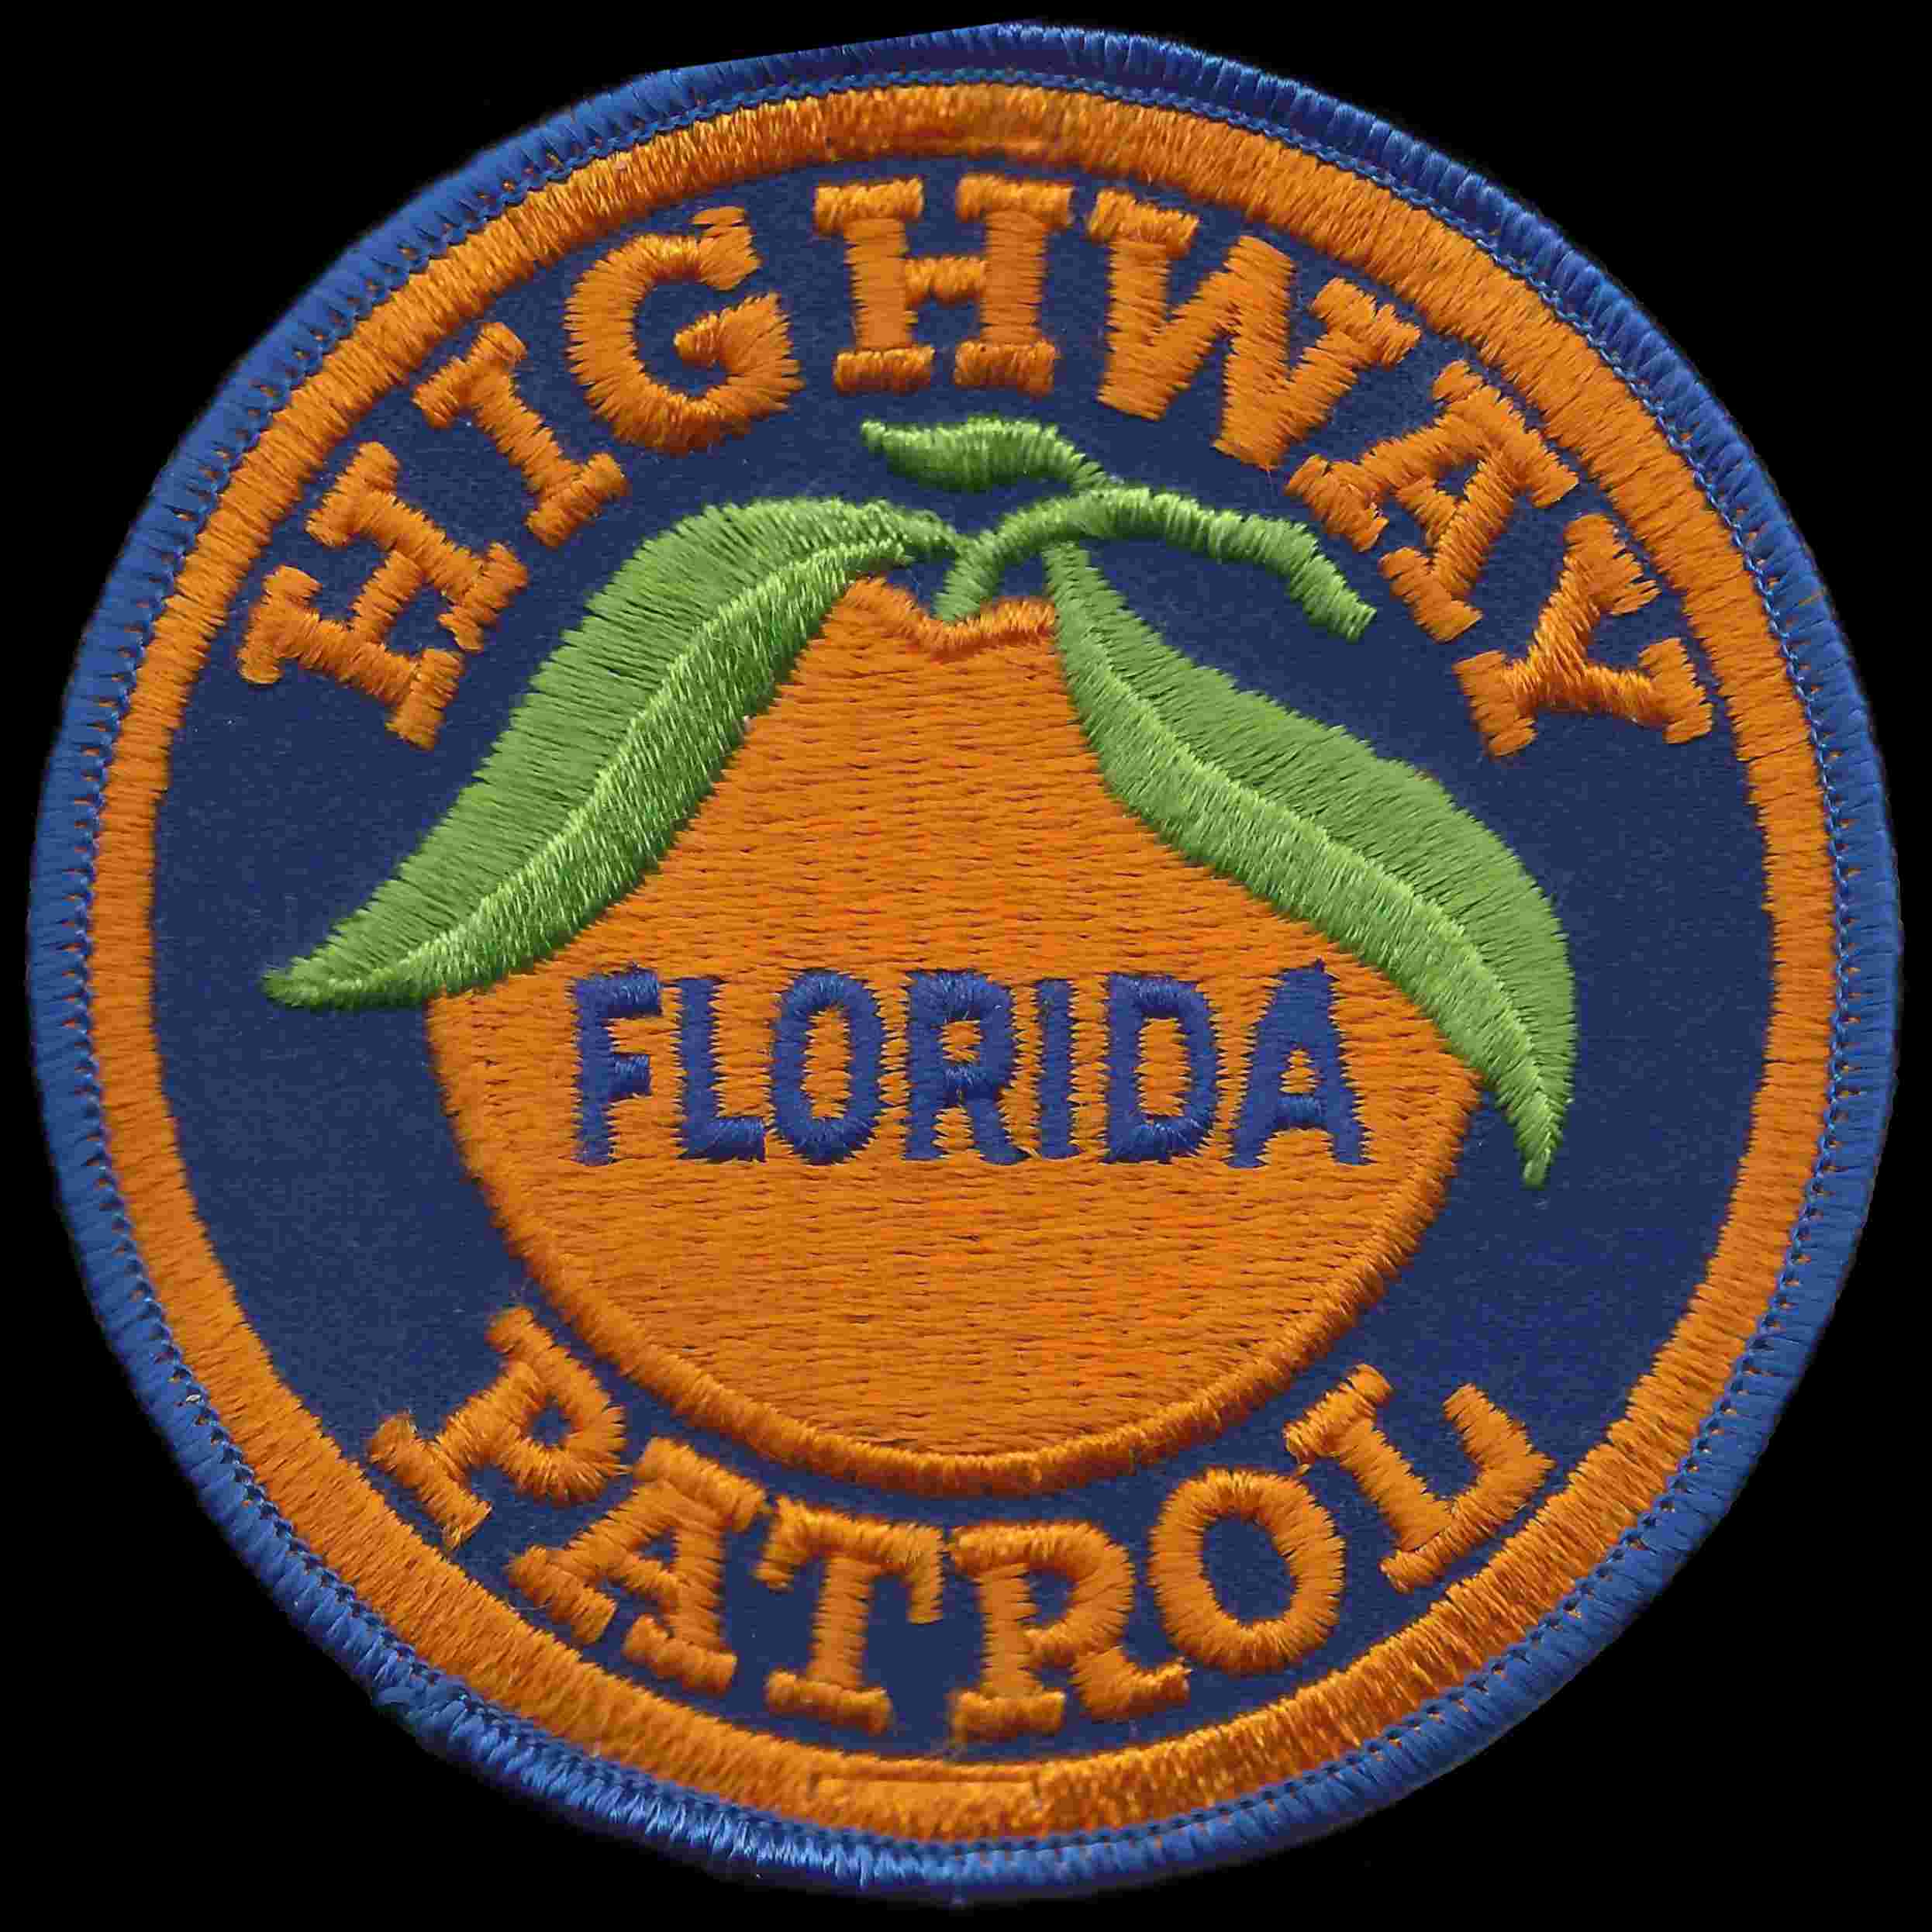 Florida Highway Patrol Patch